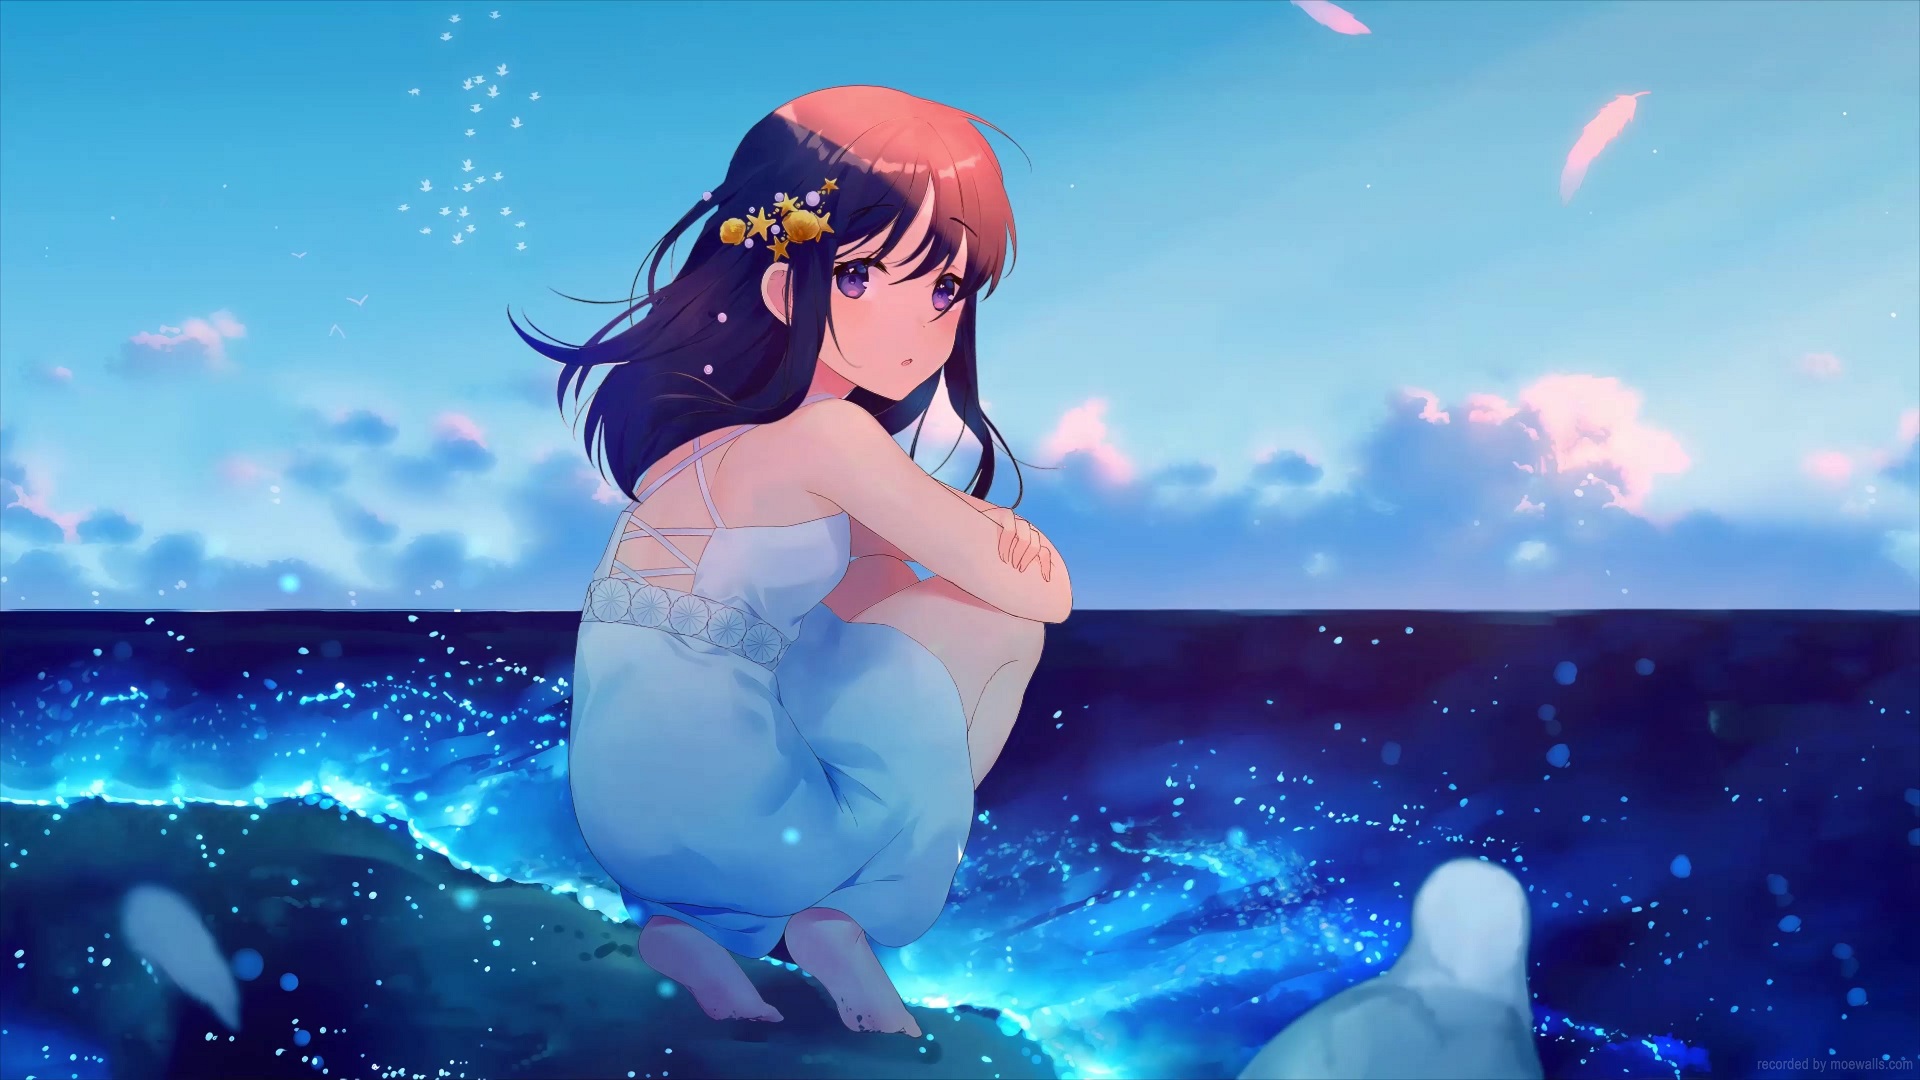 Anime-style sunset at a tropical beach